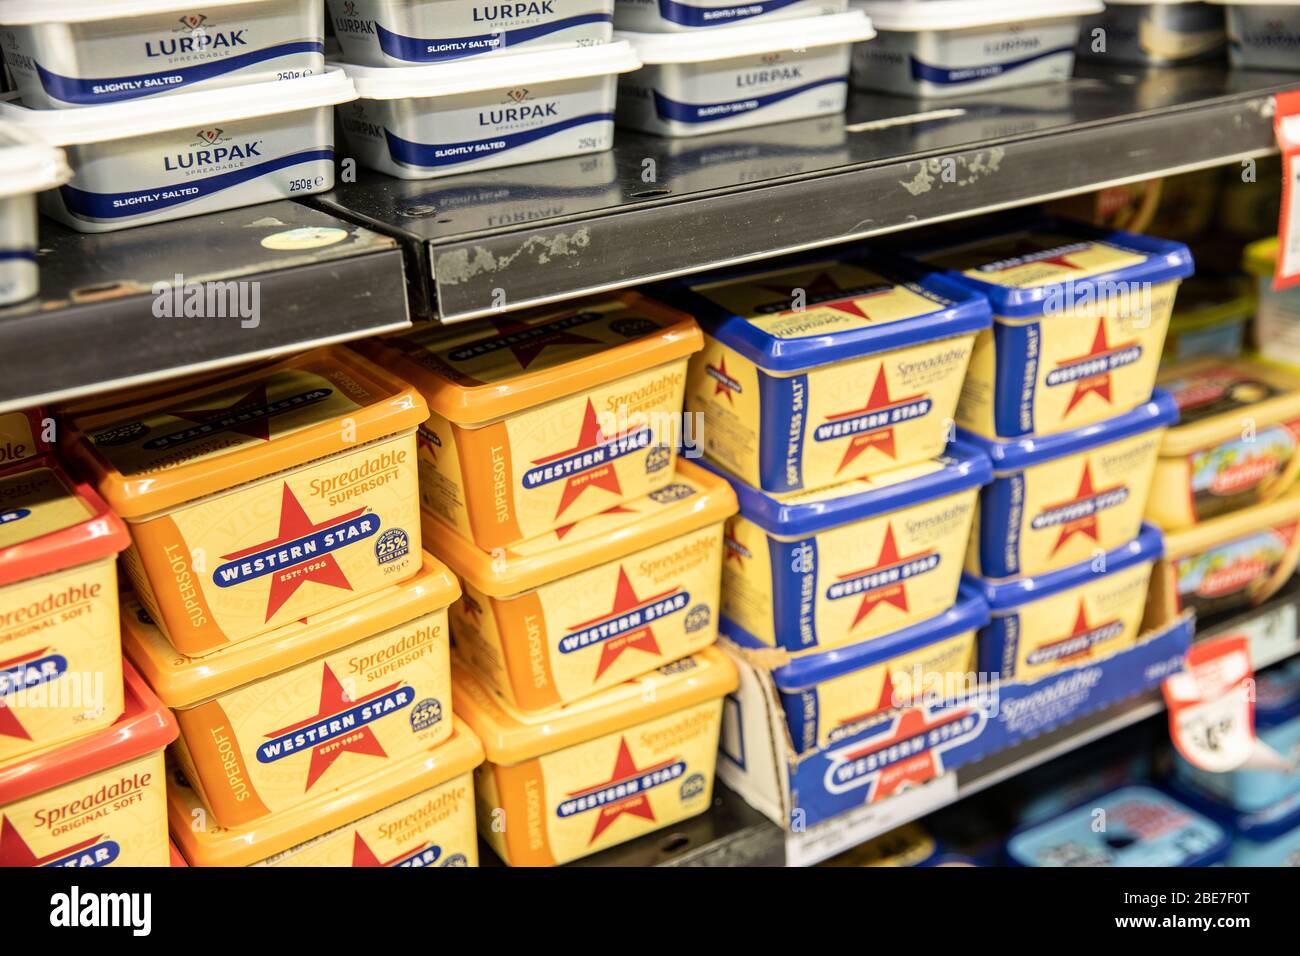 Western star butter made in australia and lurpak butter spread made in  Denmark on an australian supermarket shelf Stock Photo - Alamy